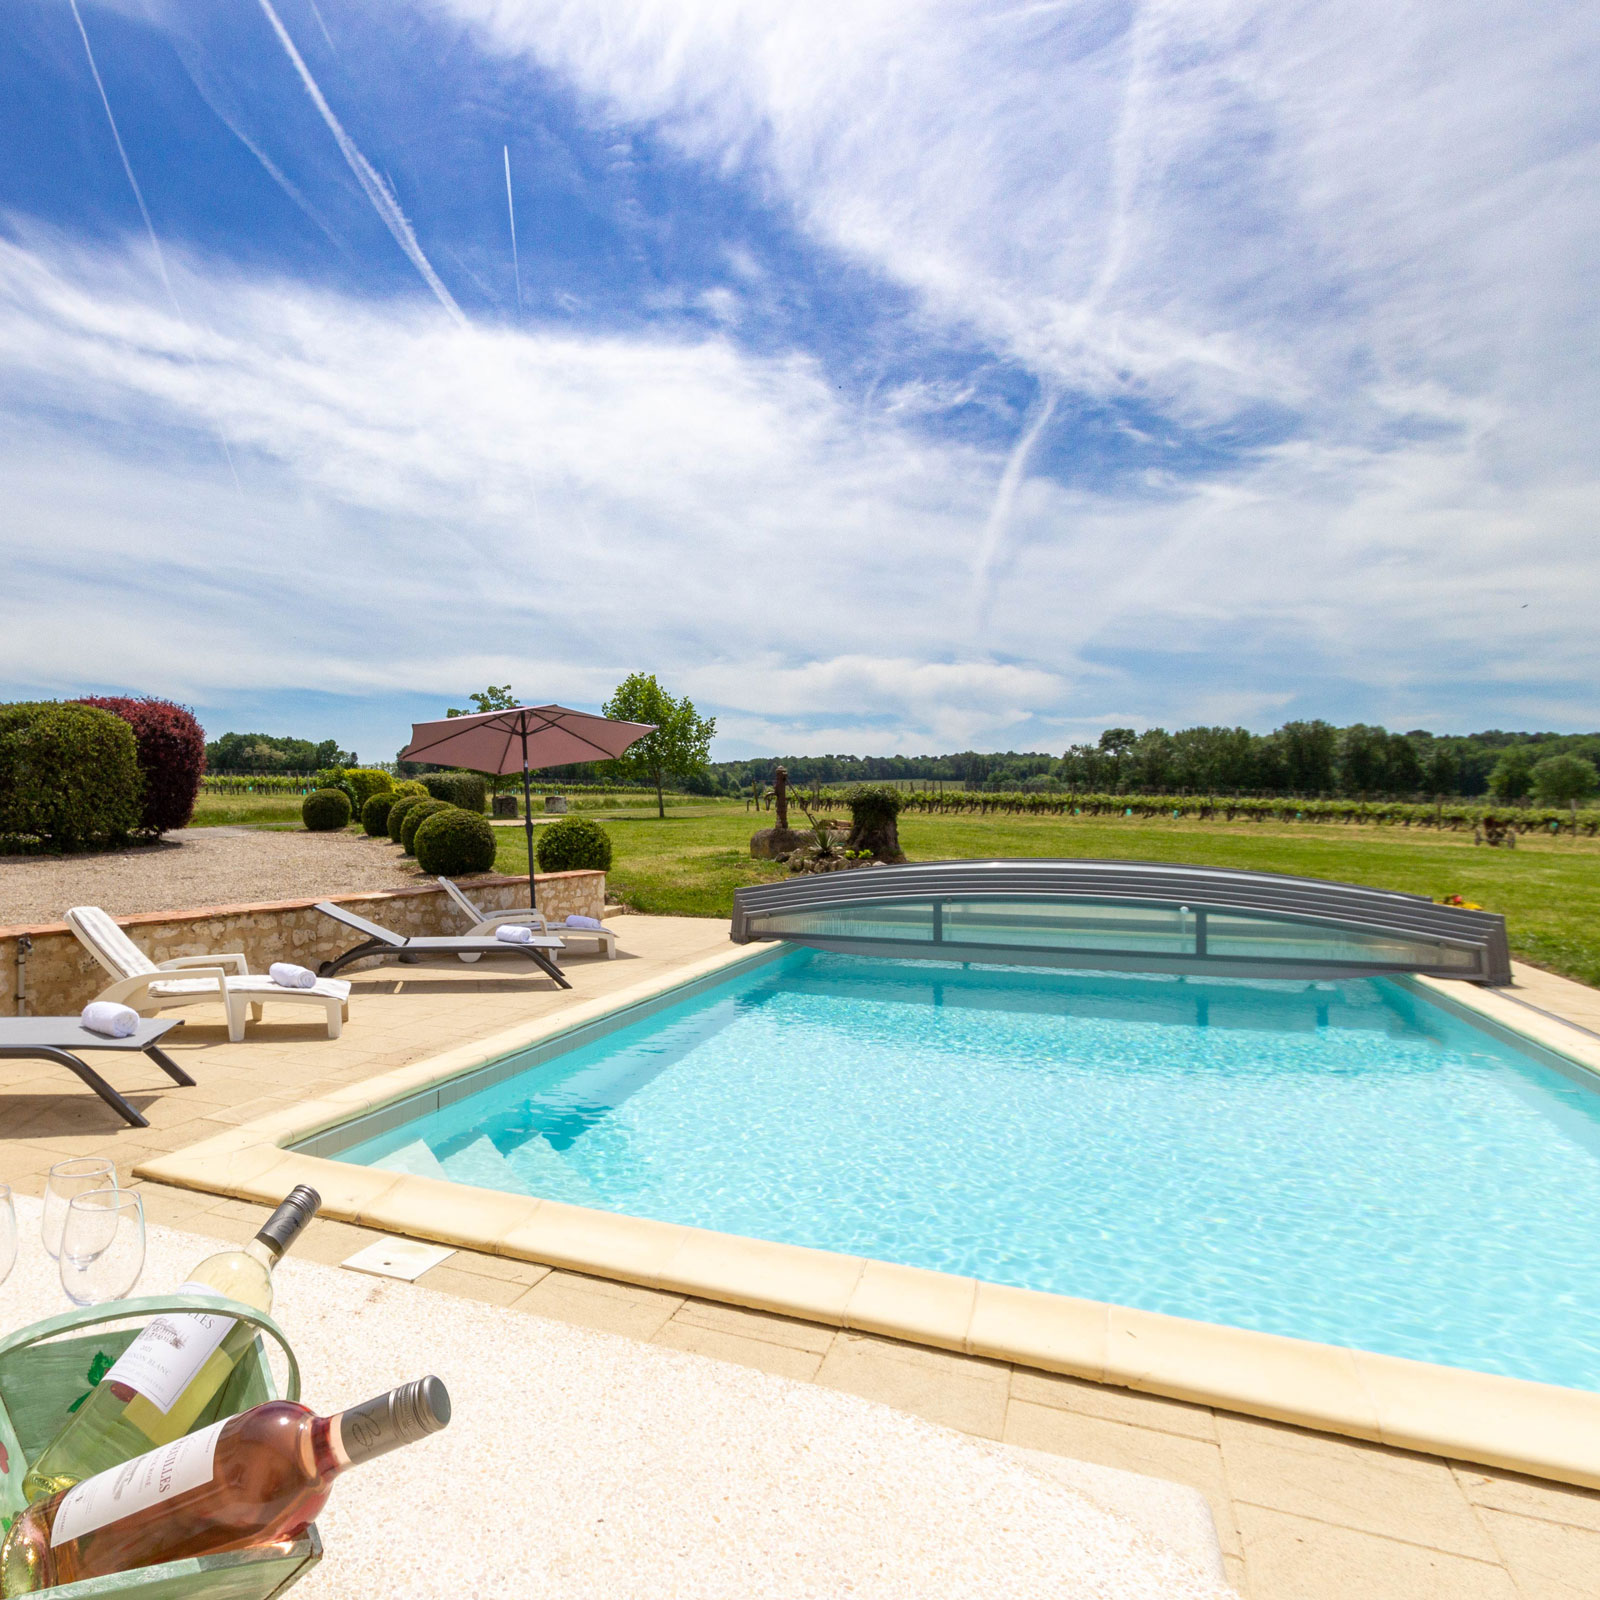 Jubin holiday villa in France near duras and Monsegur, sw France